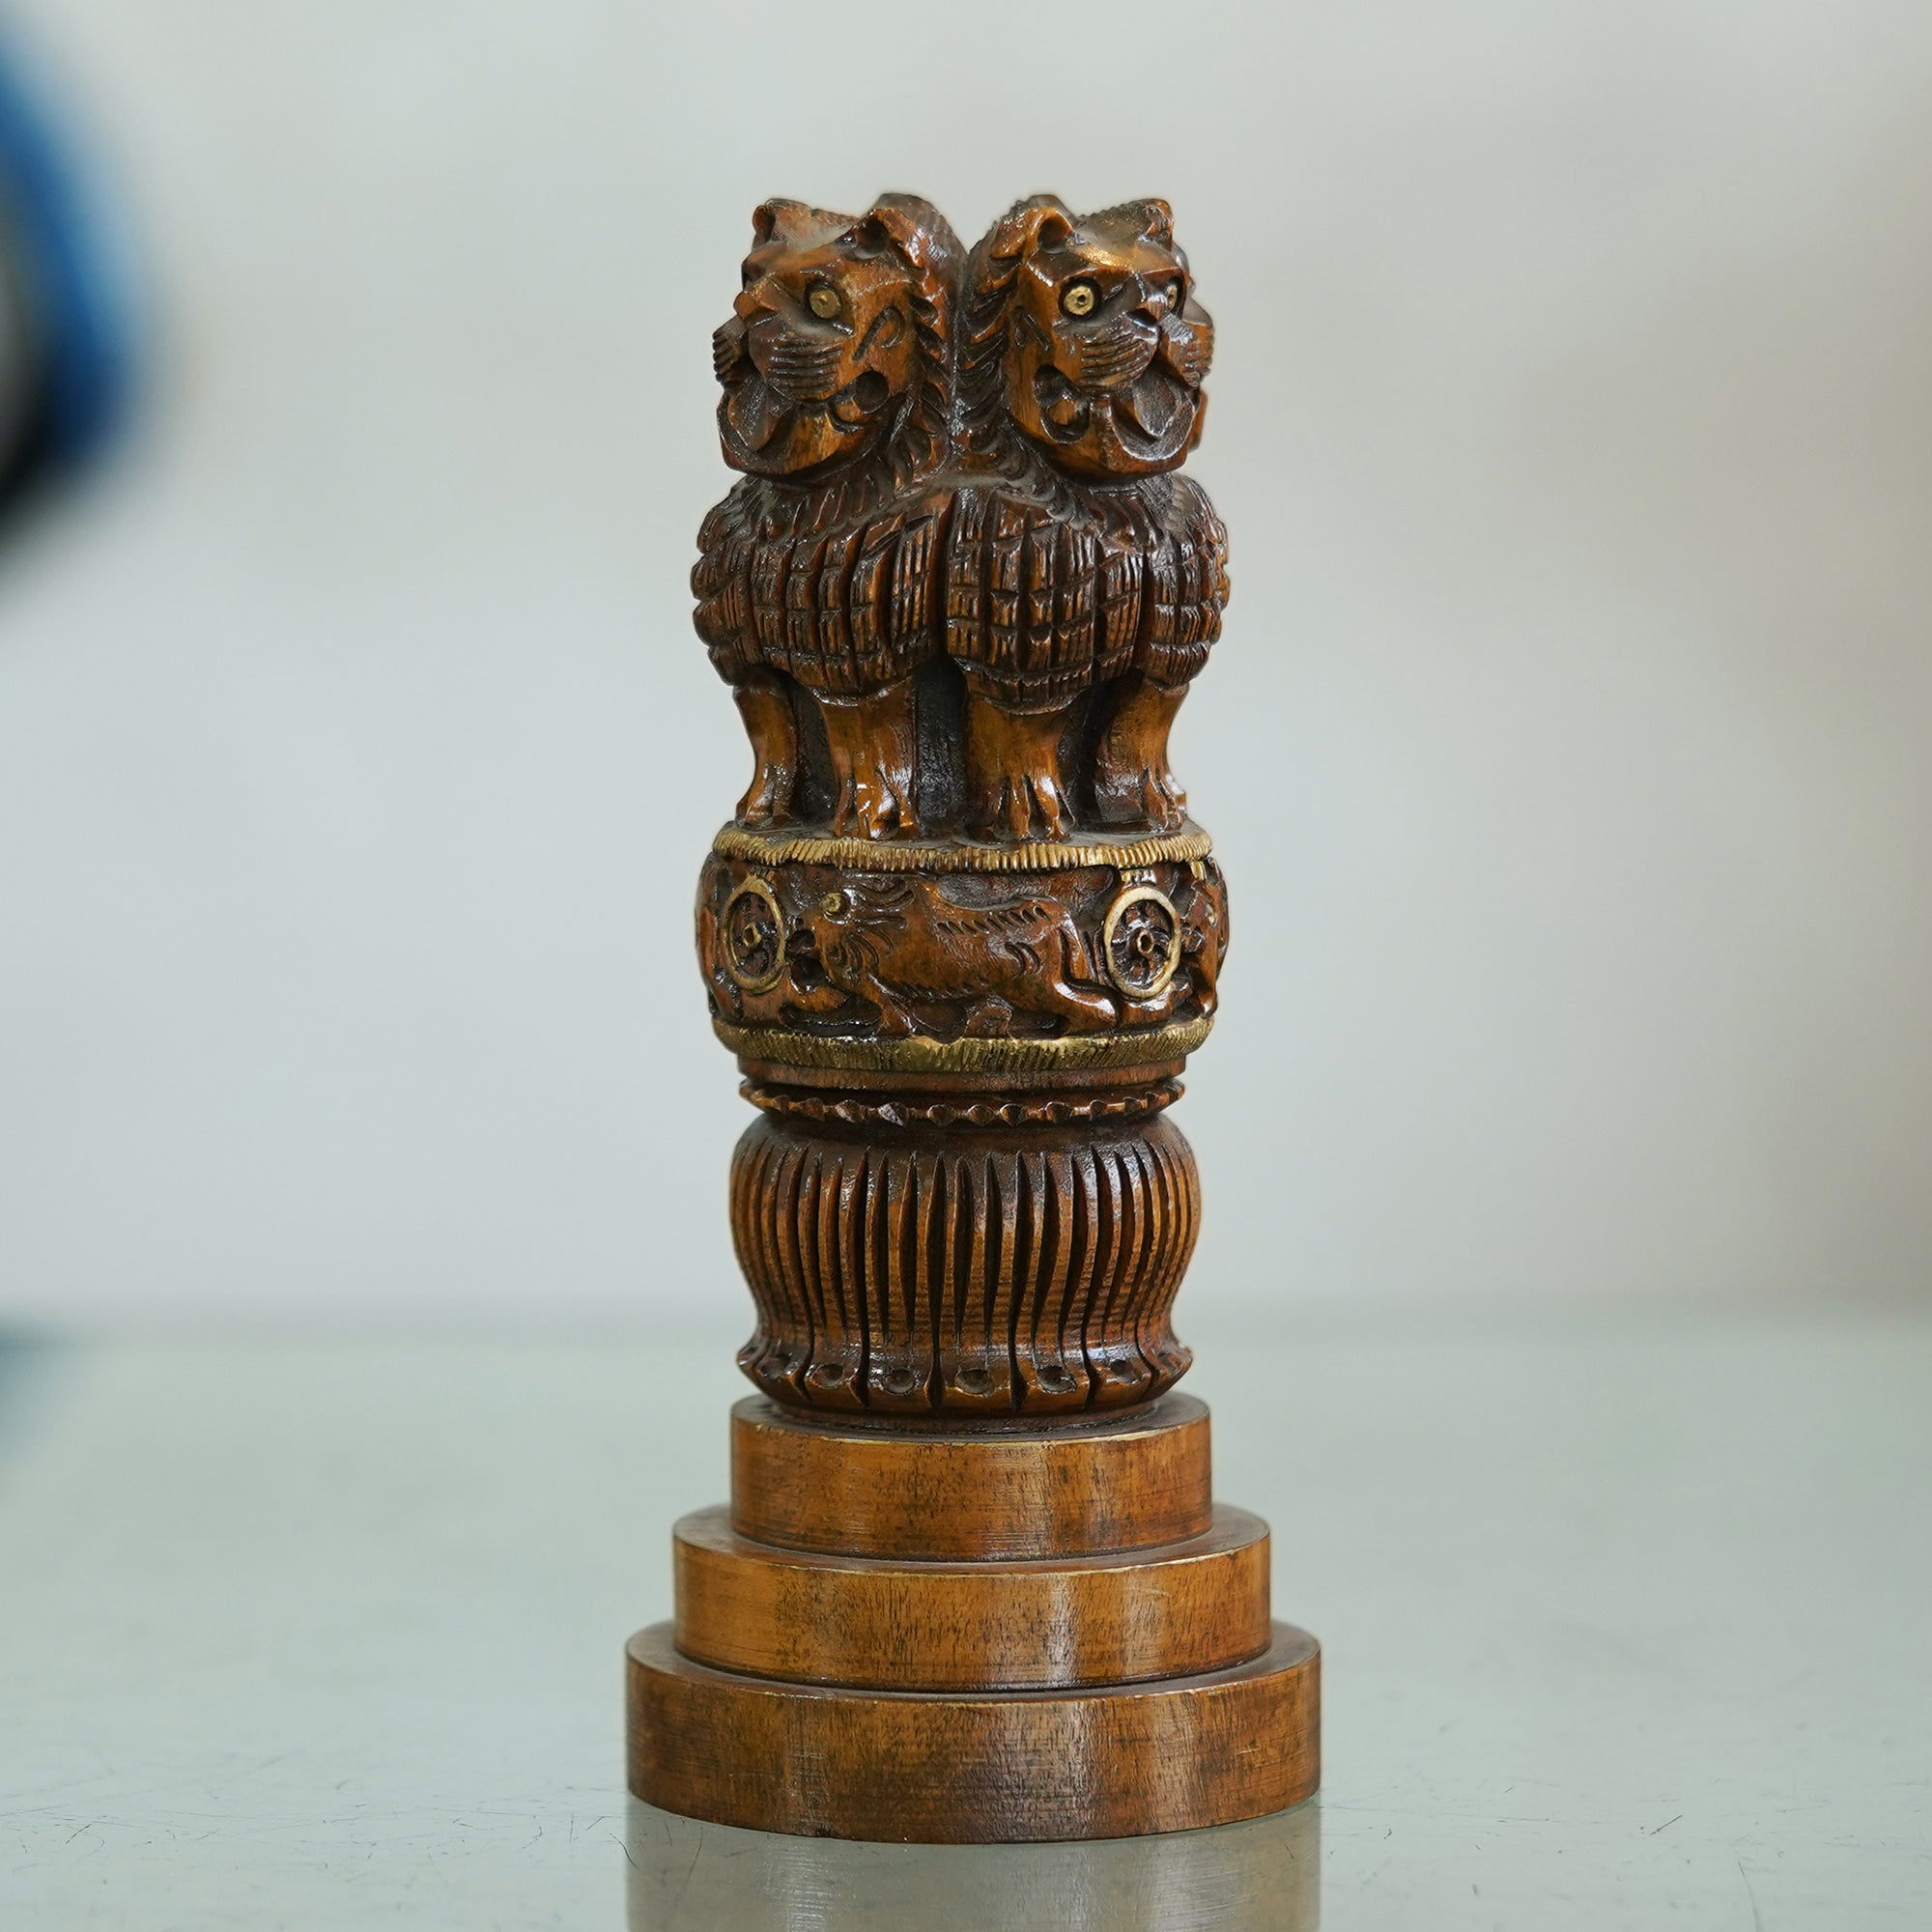 Deveie Crafts Wooden Ashoka Pillar Replica - Indian Heritage Décor